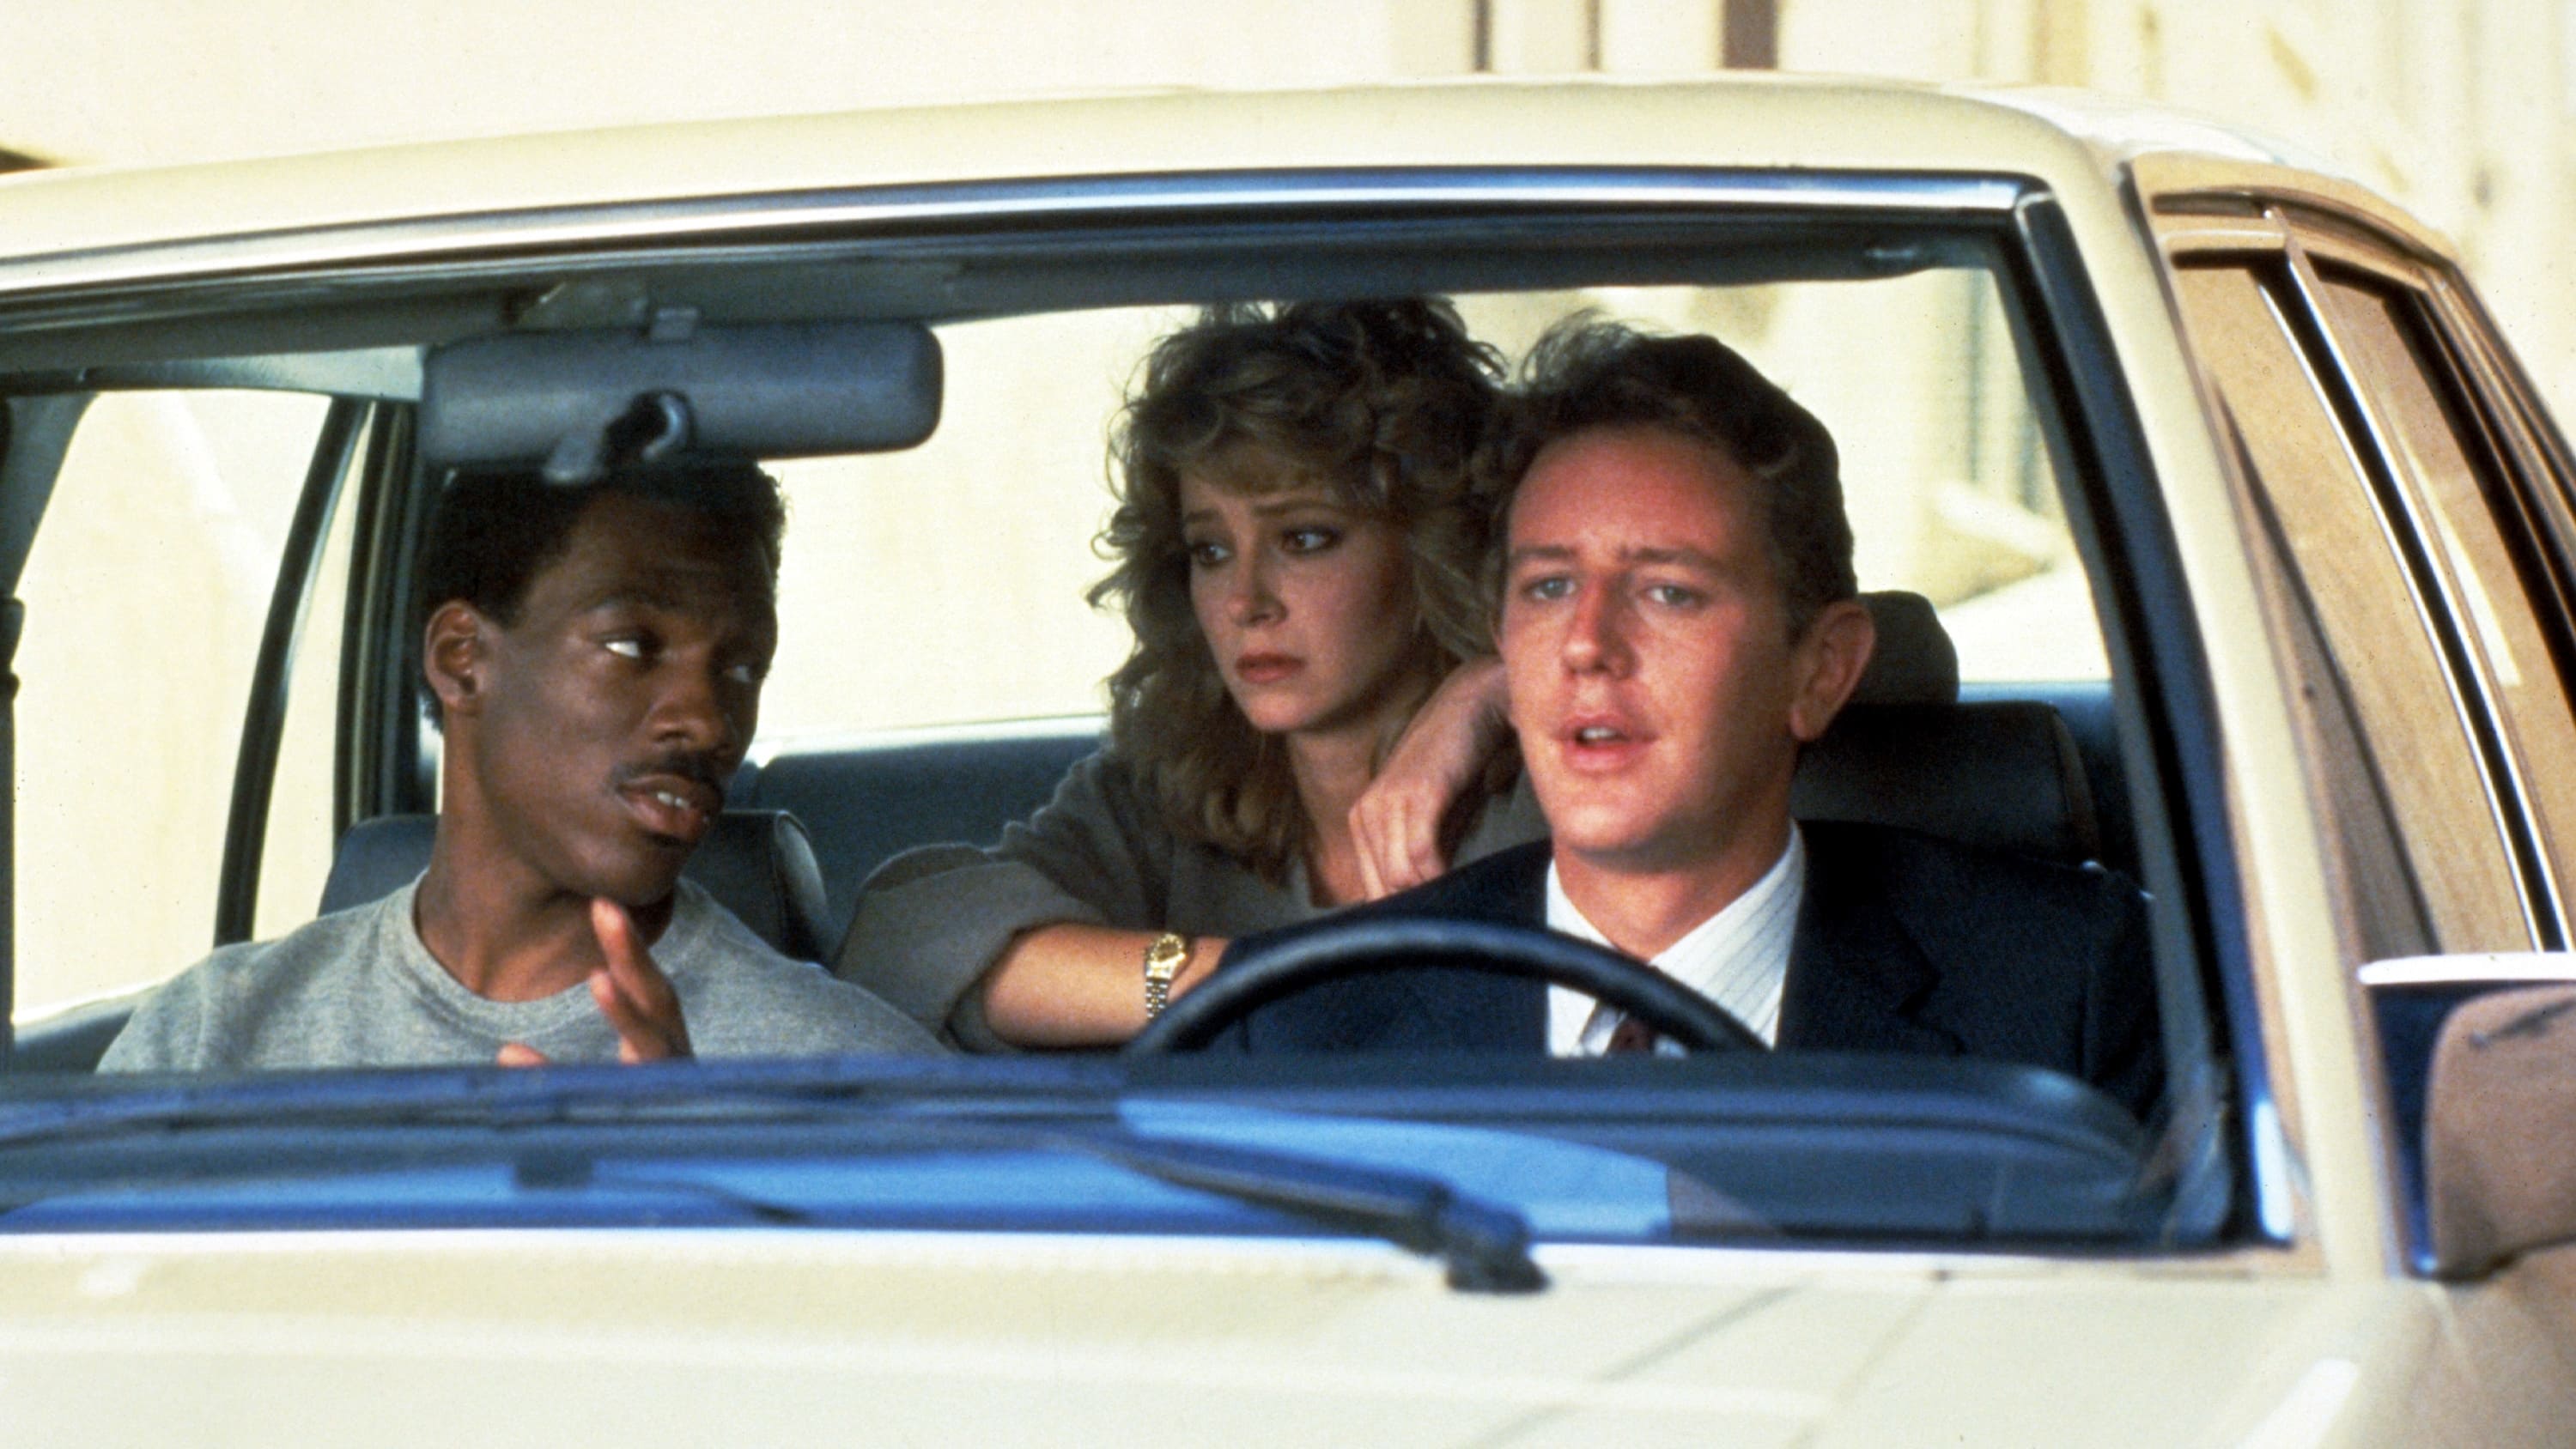 Le Flic de Beverly Hills (1984)